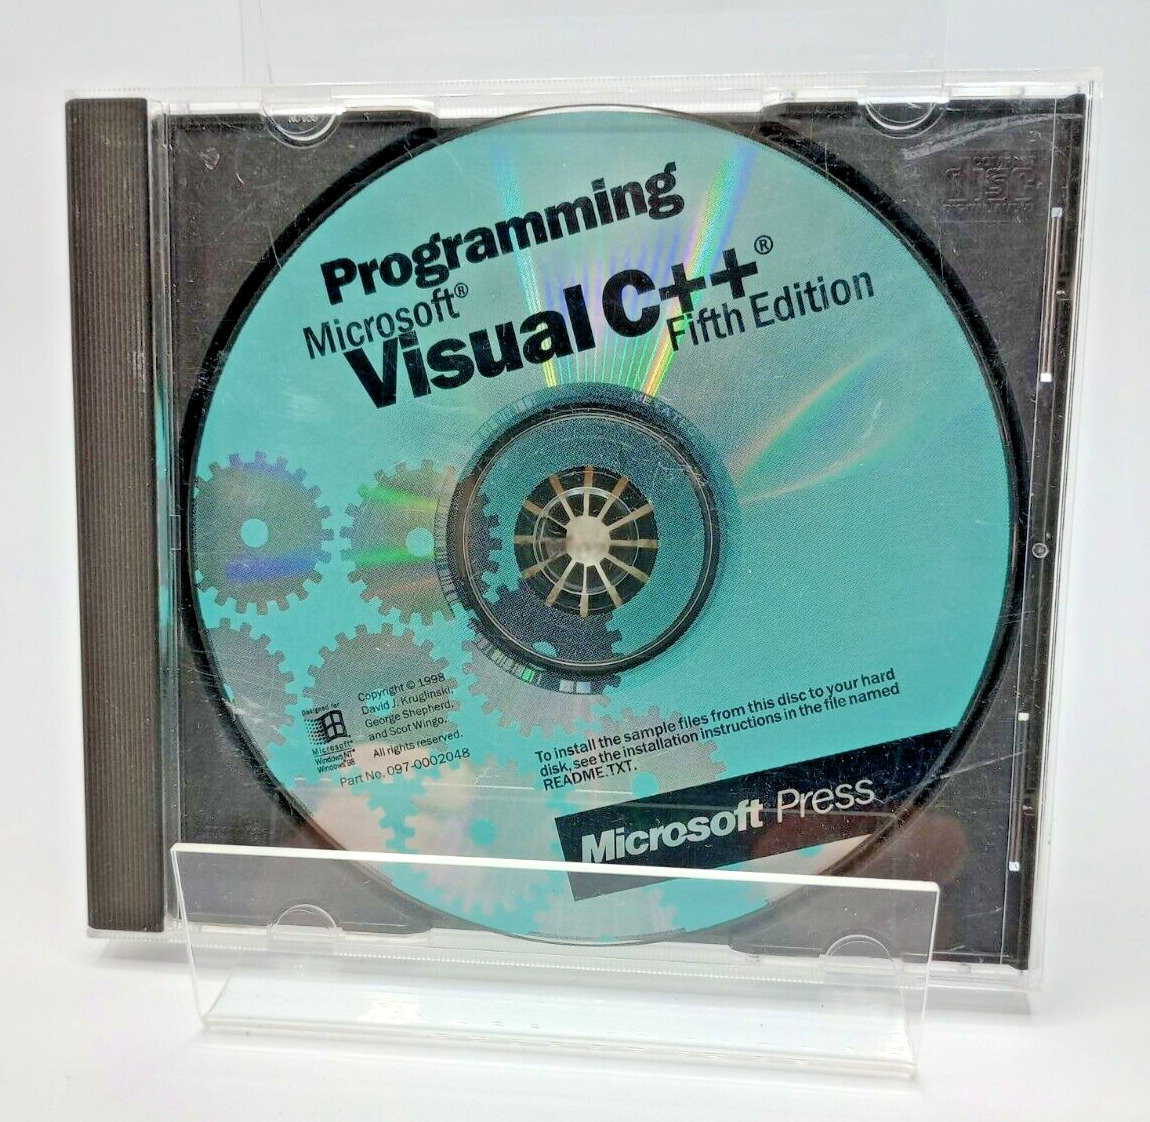 Programming Microsoft Visual C ++ - Fifth Edition CD ROM, Microsoft Press